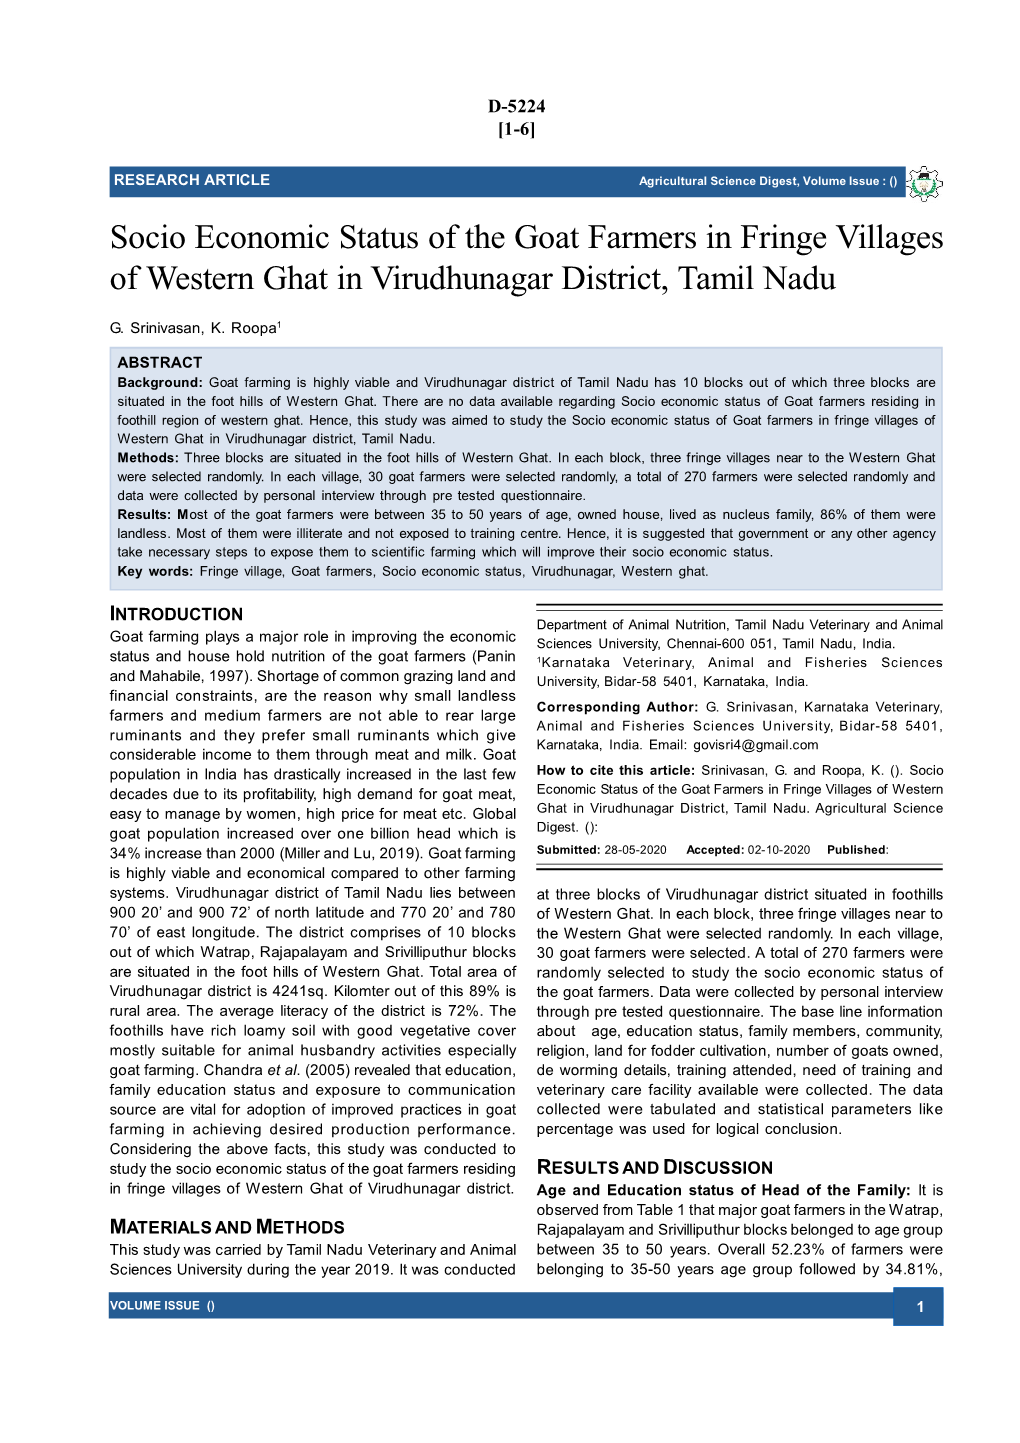 Socio Economic Status of the Goat Farmers in Fringe Villages of Western Ghat in Virudhunagar District, Tamil Nadu